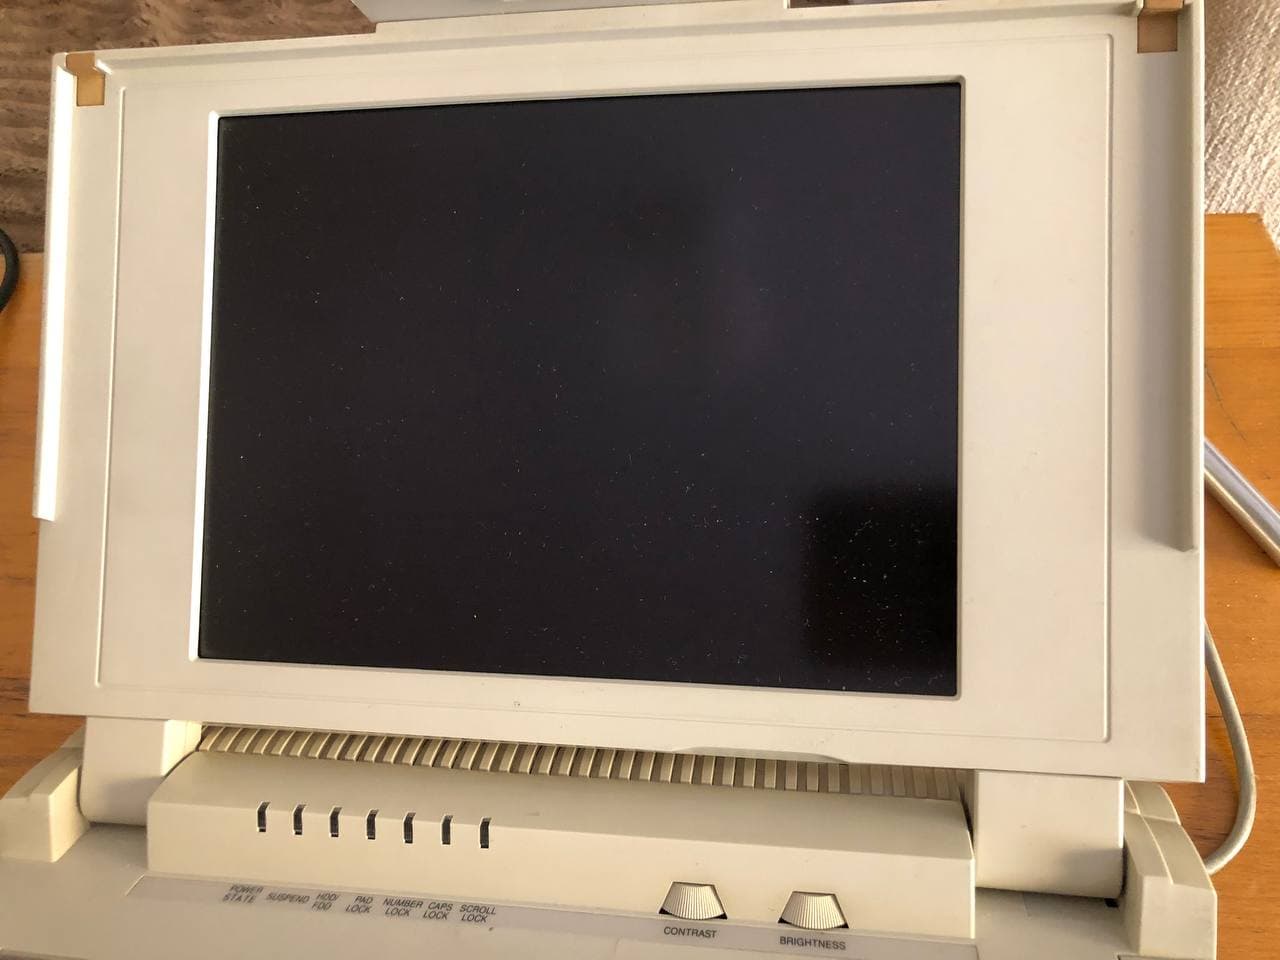 Обзор ноутбука 1990 года — Zenith MasterSport 386sx - 9